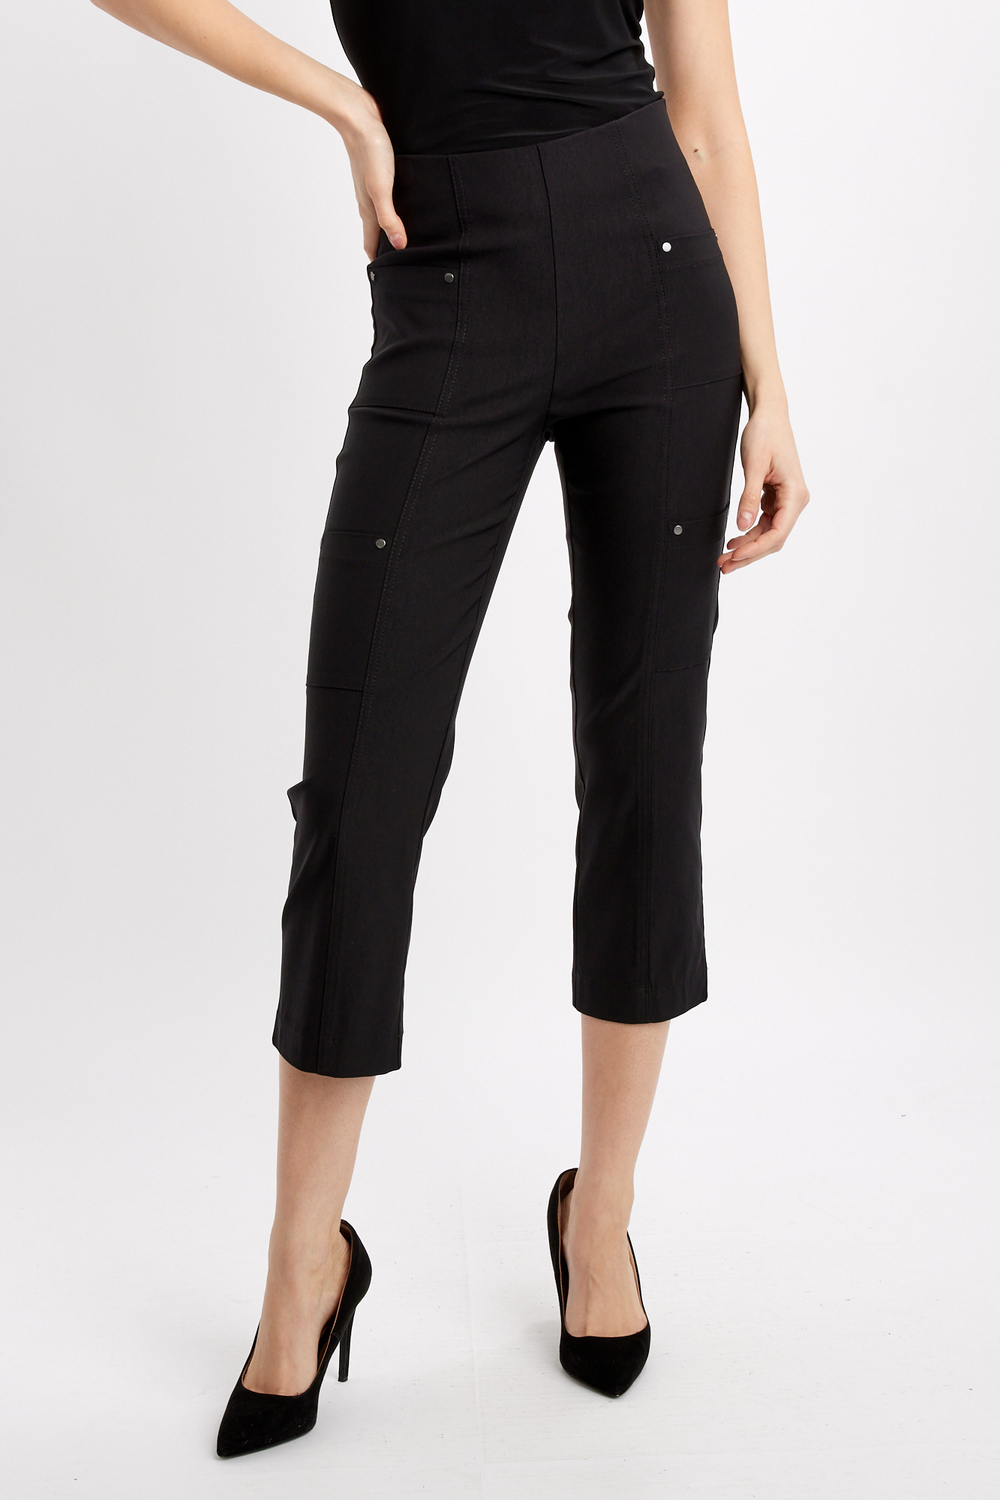 Multi-Pocket Straight Leg Pants Style 241163. Black